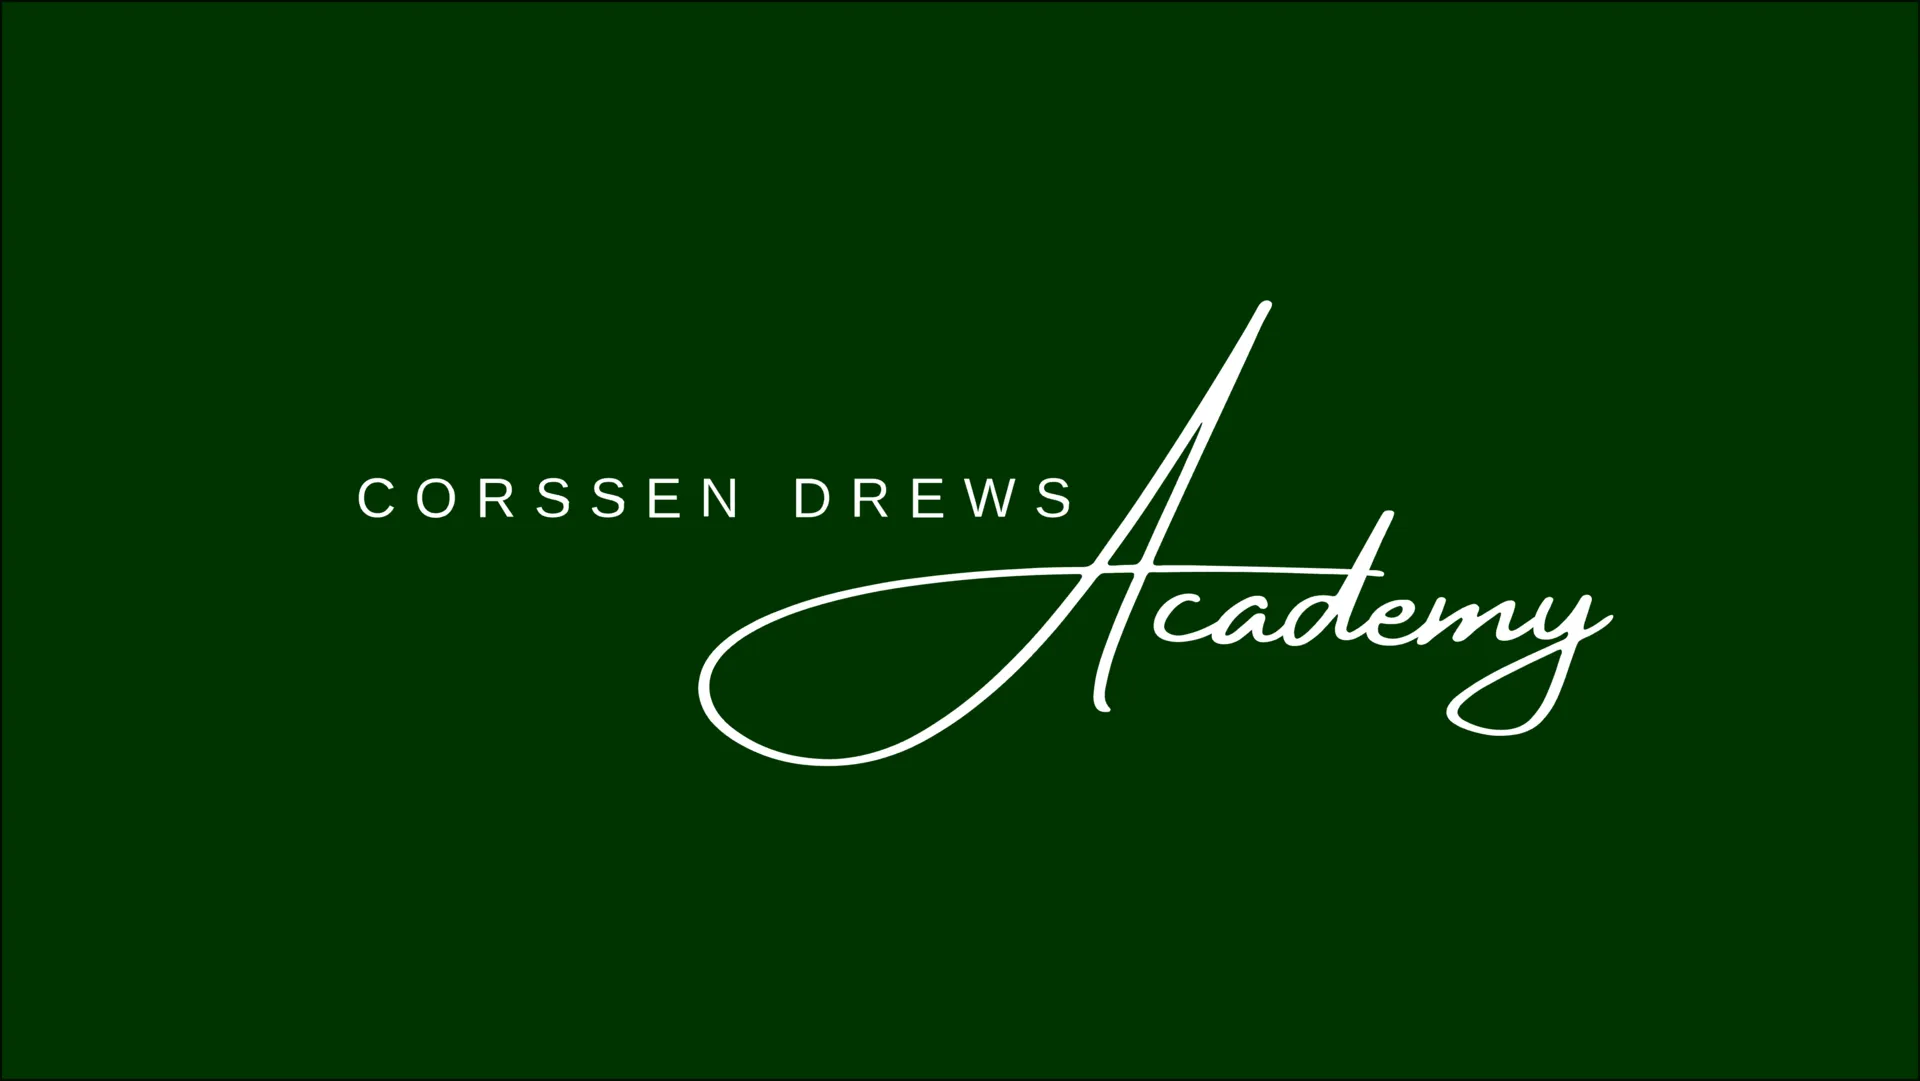 Corssen Drews Academy